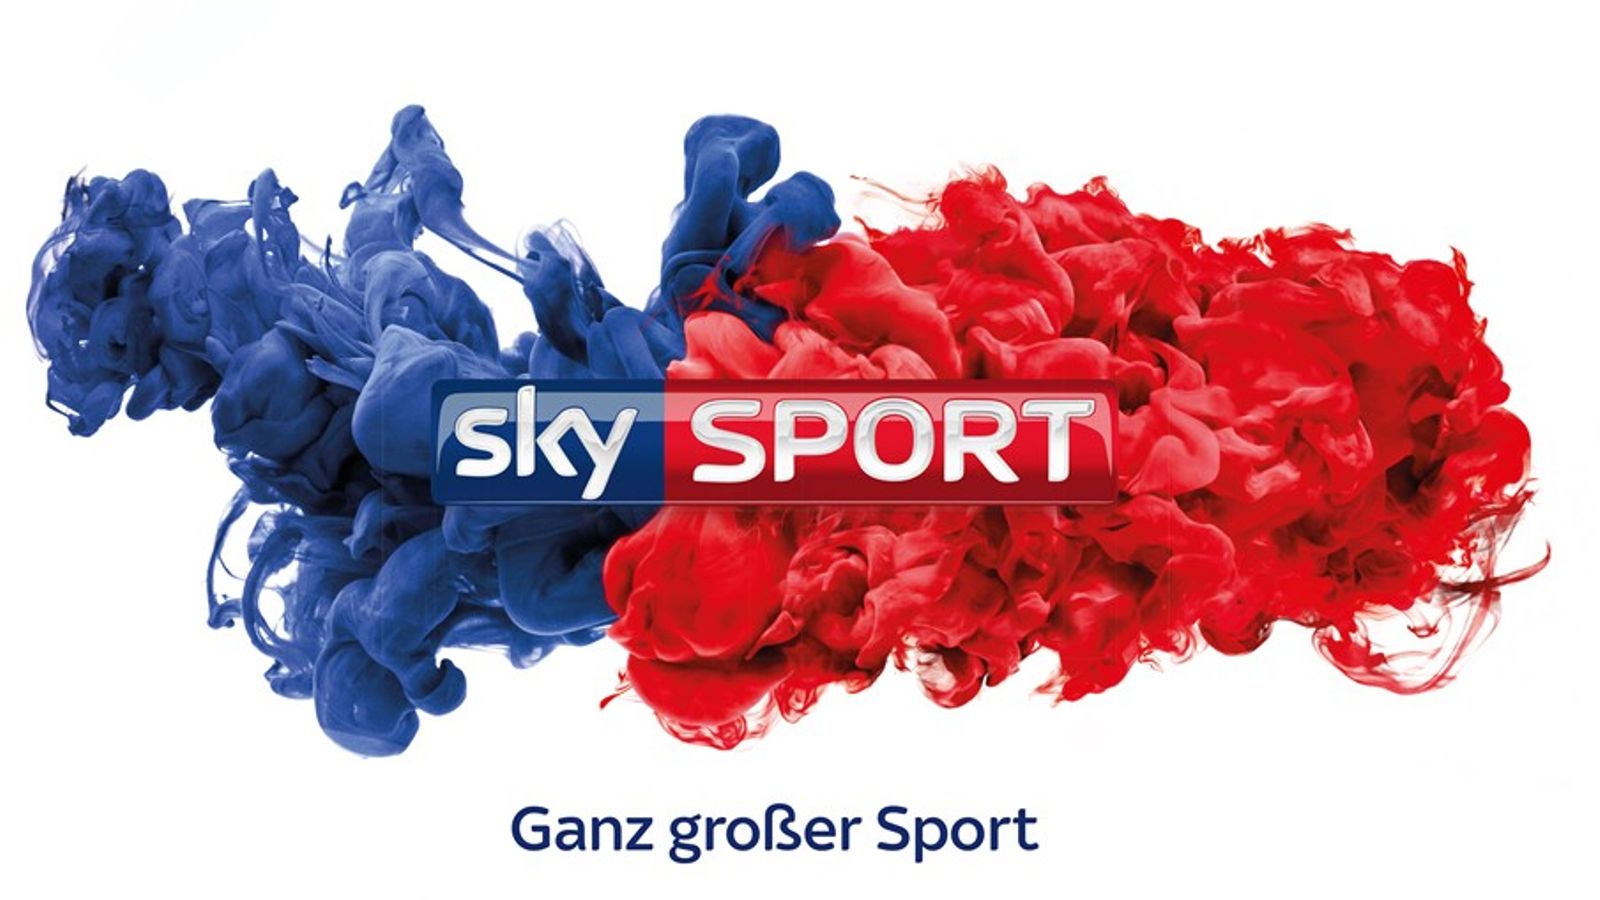 sky sport news online